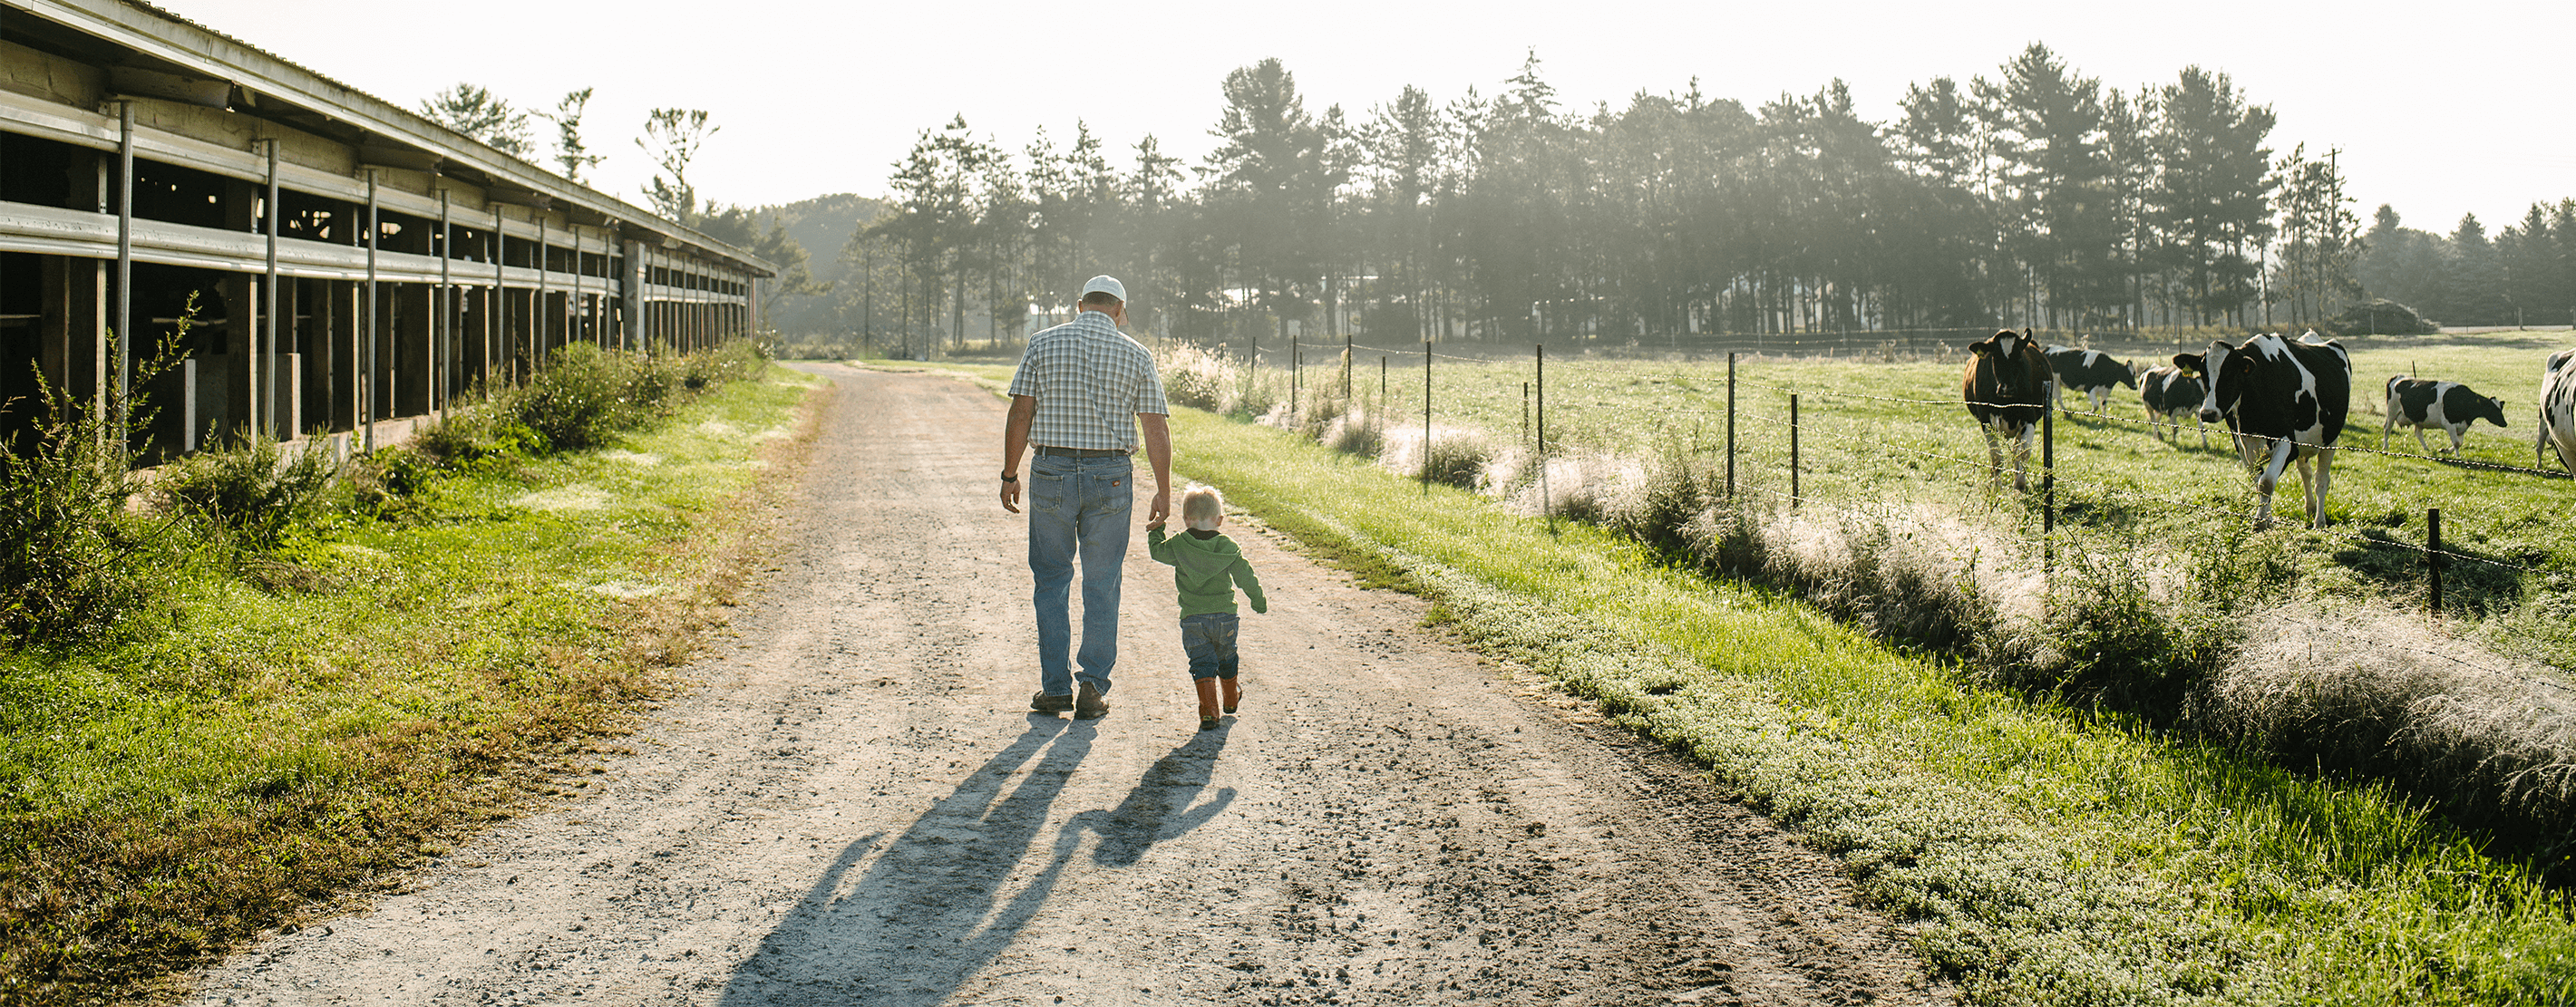 Pete Kappelman Walking On His Farm With His Grandson